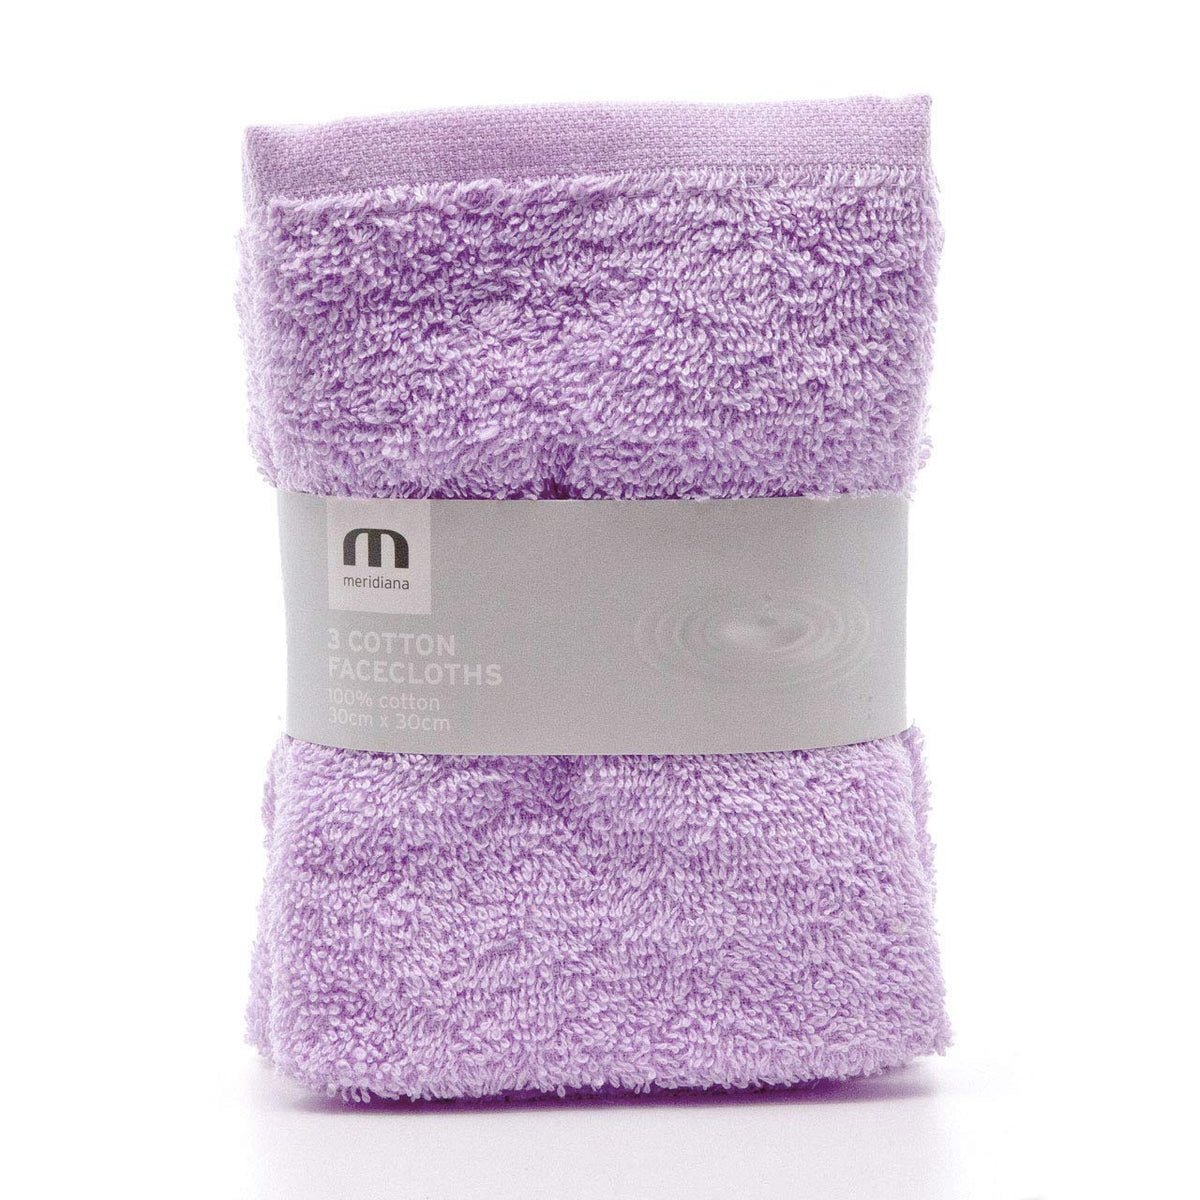 Meridiana Super Soft 100% Cotton Family Washcloths. Machine Washable. Lavender. 3 Pack. 30cm x 30cm